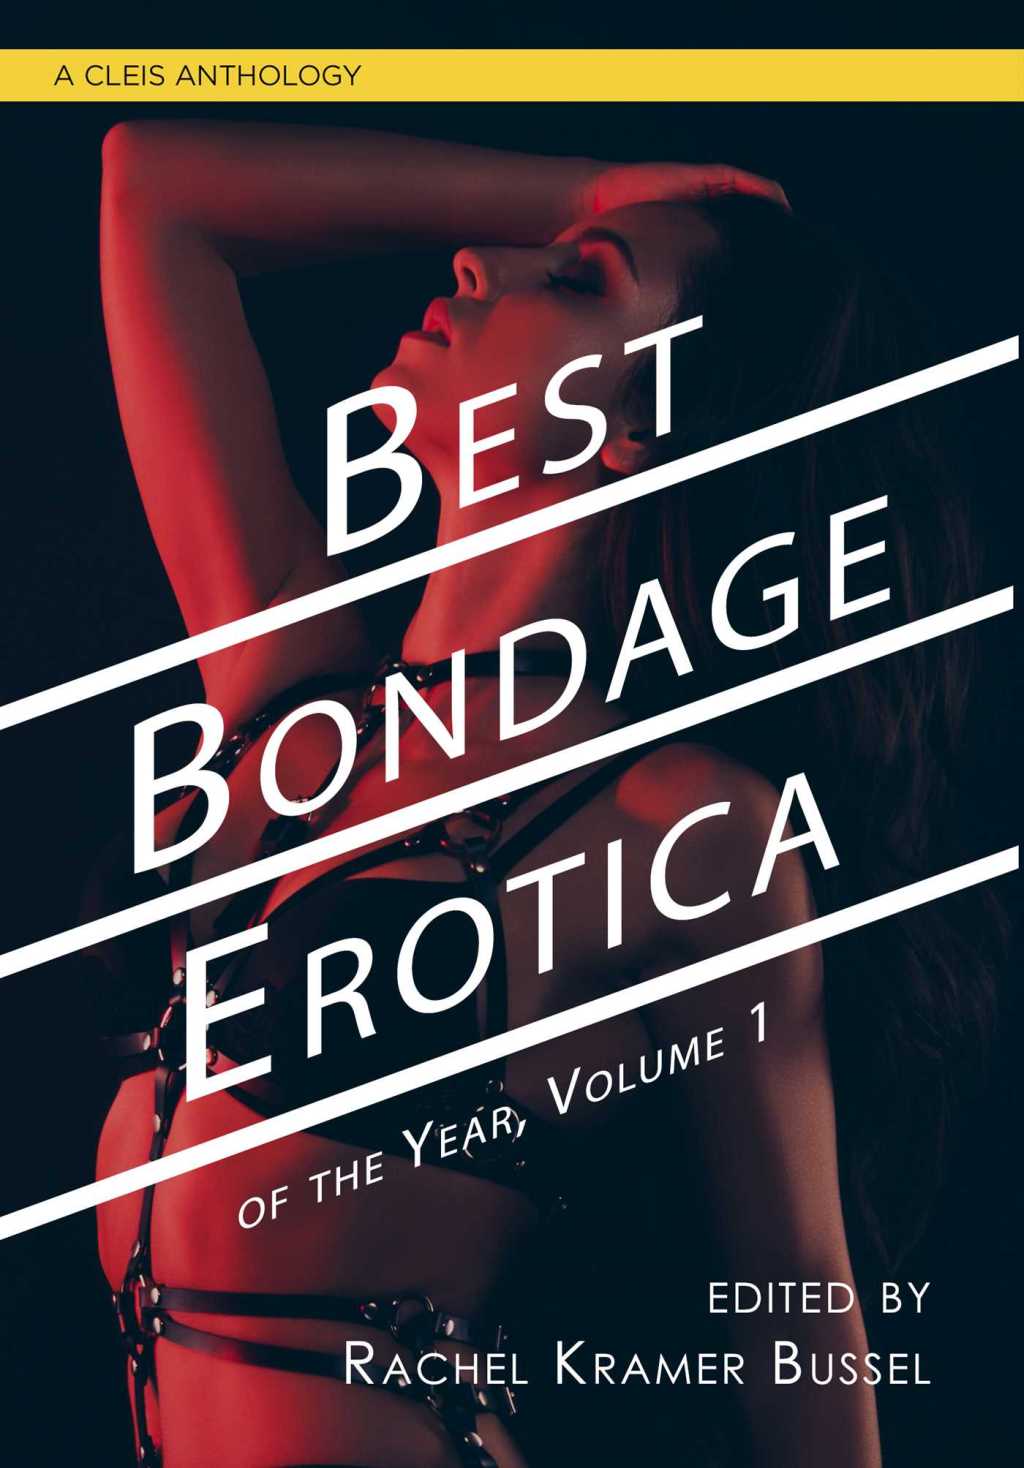 Book Review: Best Bondage Erotica of the Year Vol 1 edited by Rachel Kramer Bussel (erotica)